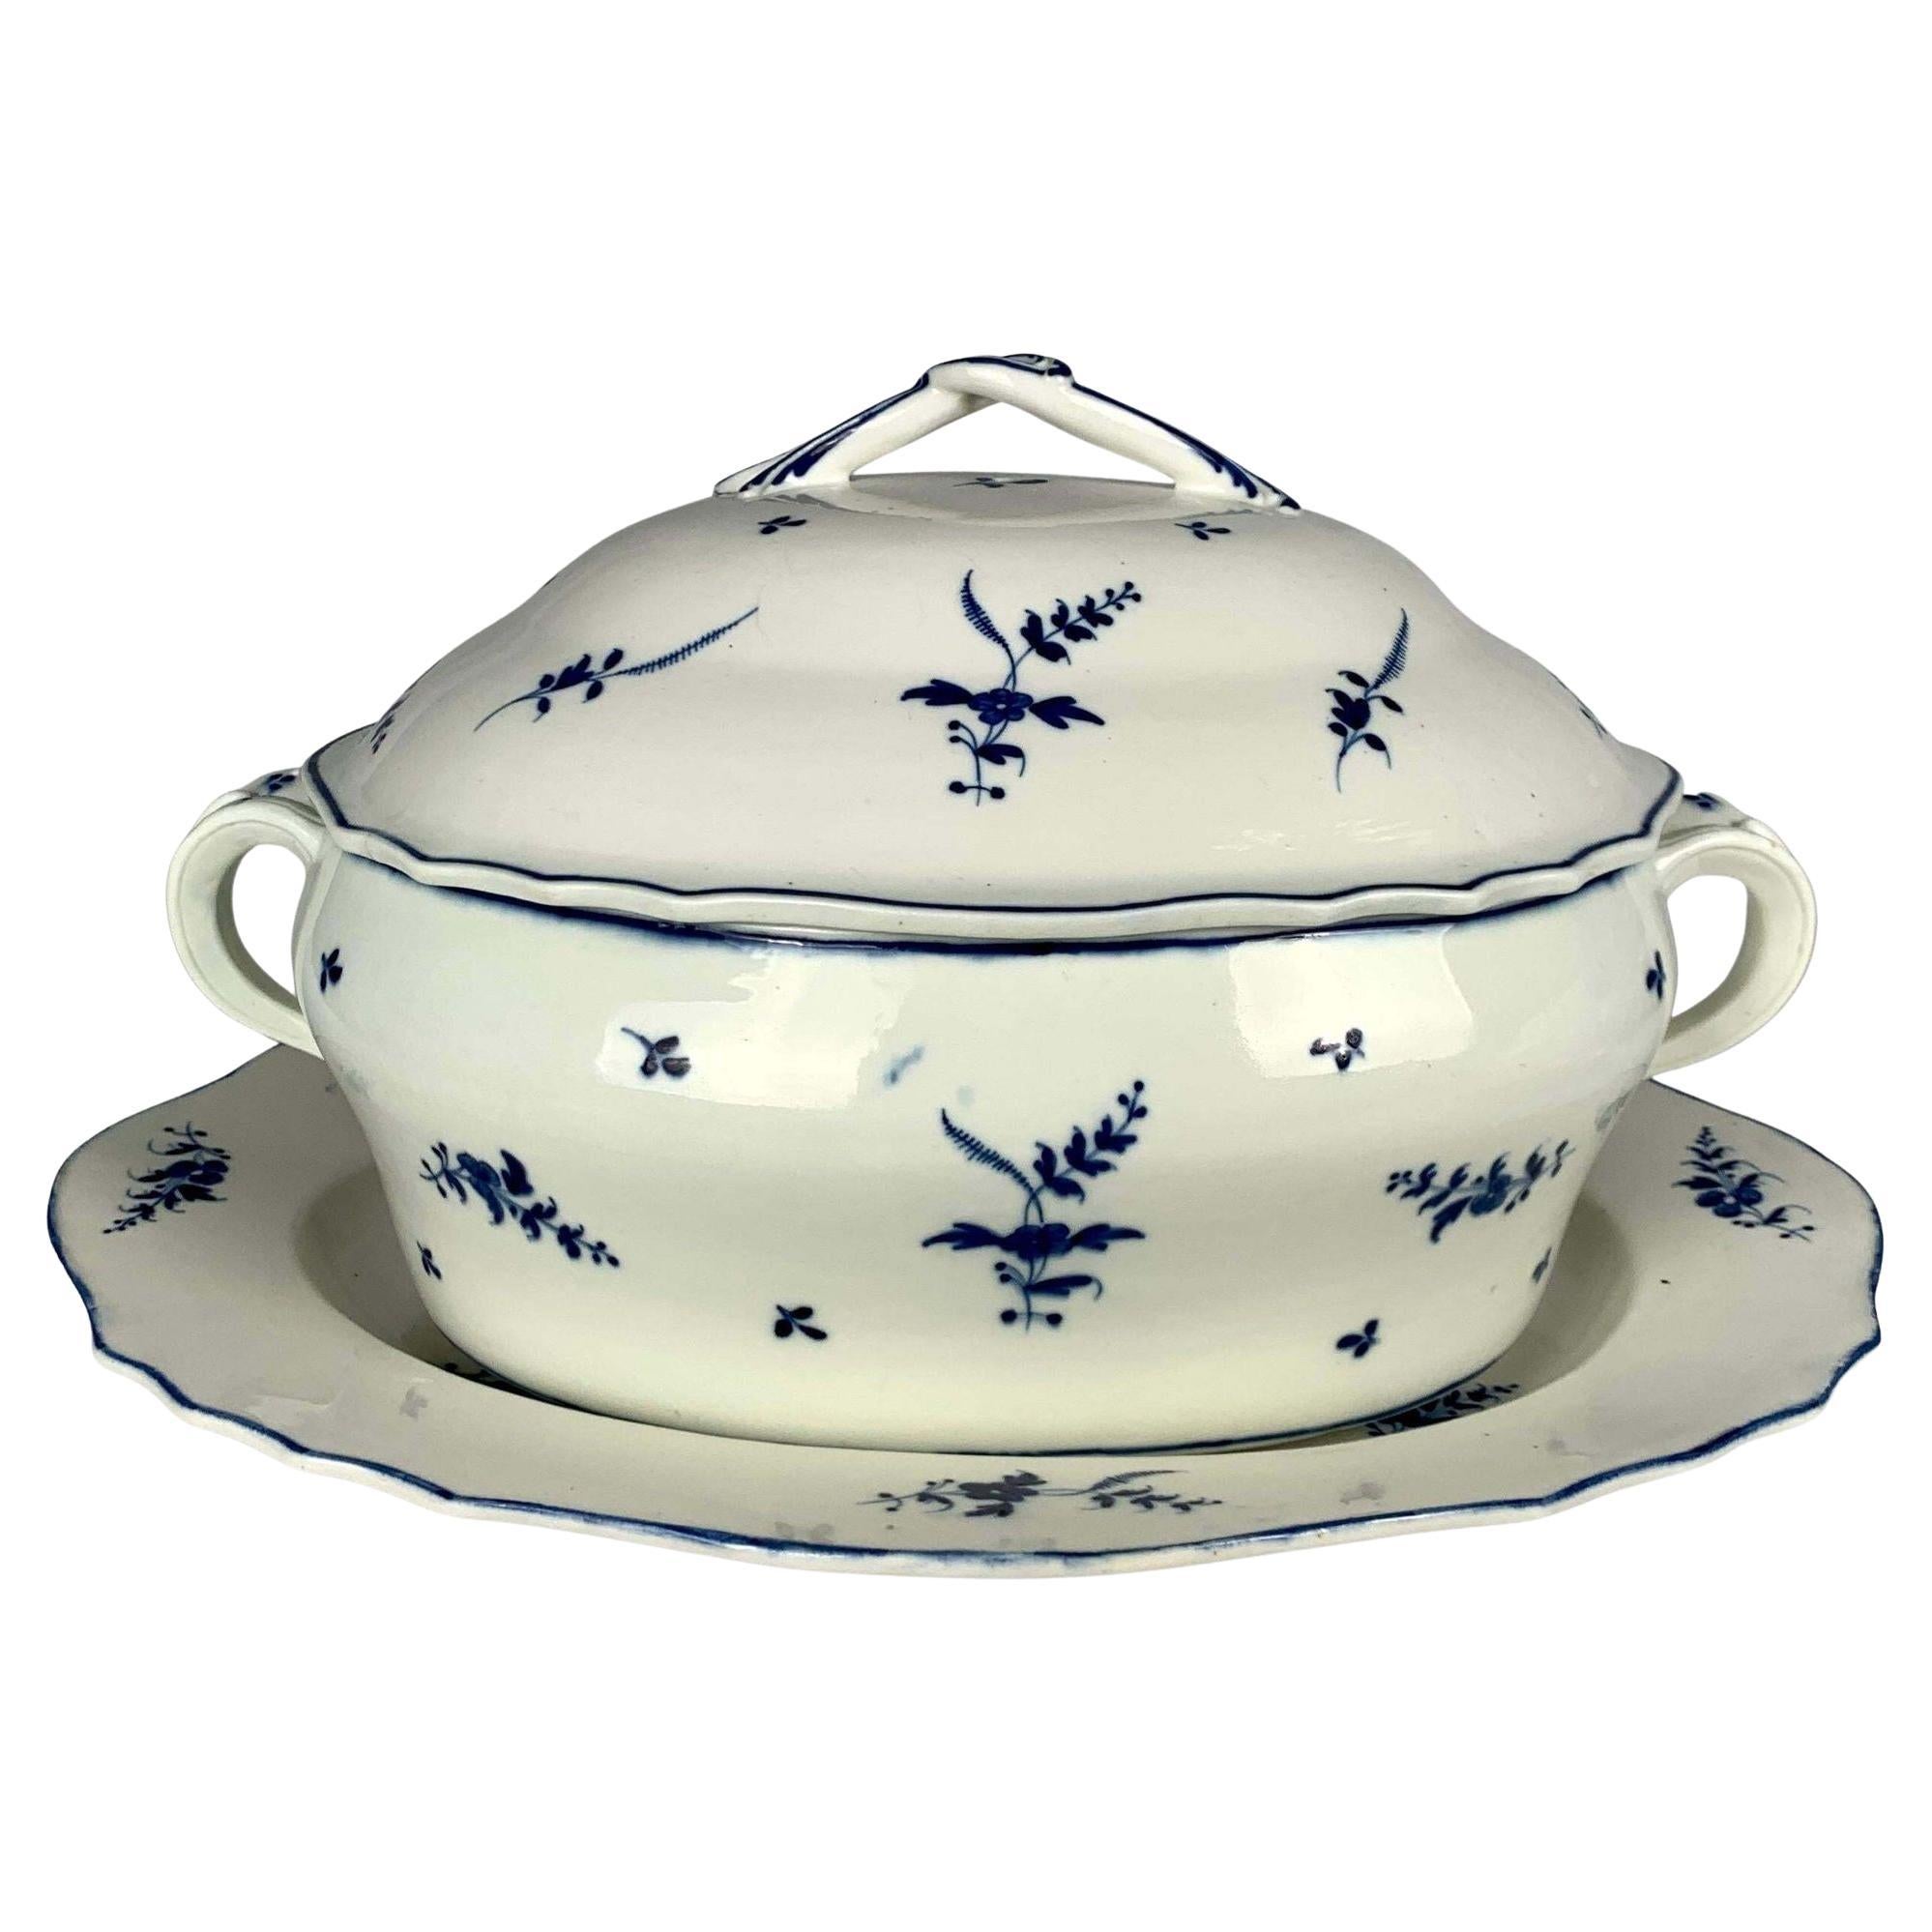 Is Sevres porcelain always marked?